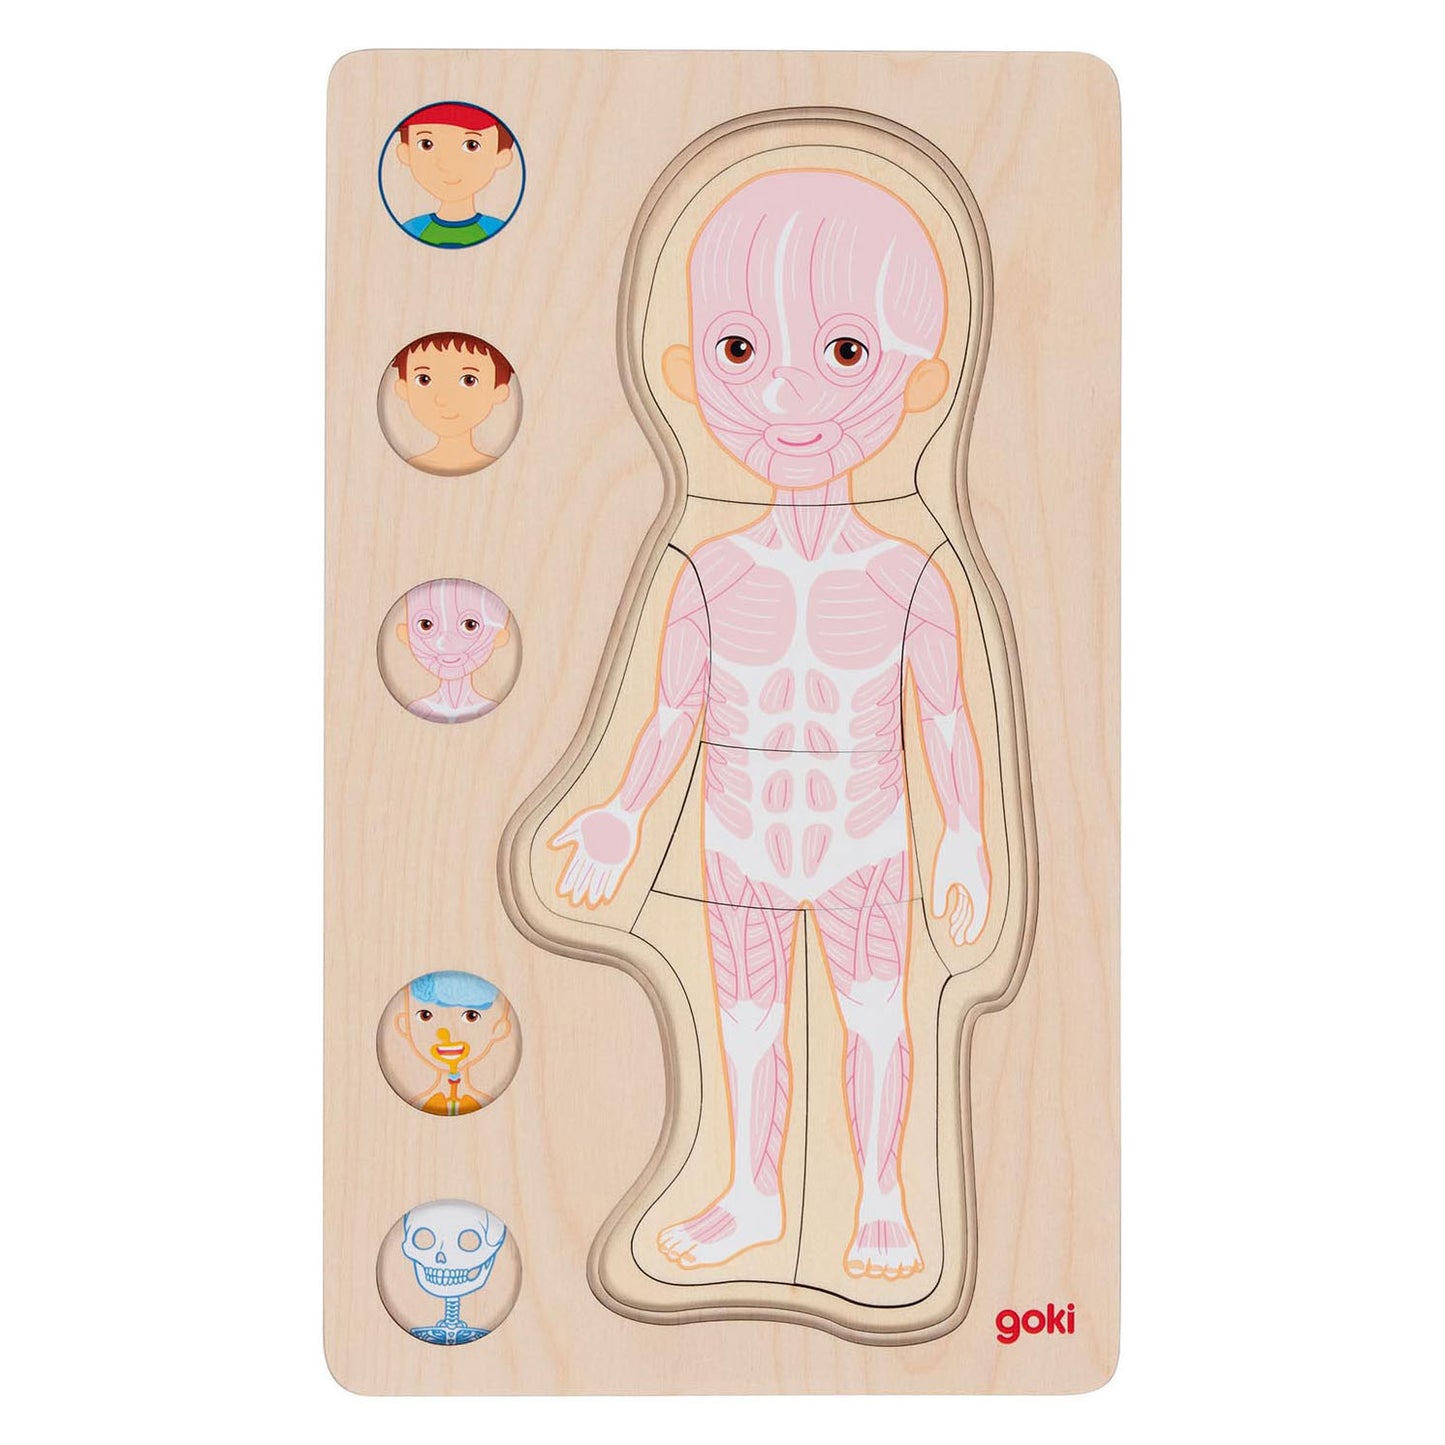 Goki Madera Capa Puzzle Human Body Boy, 29 °.